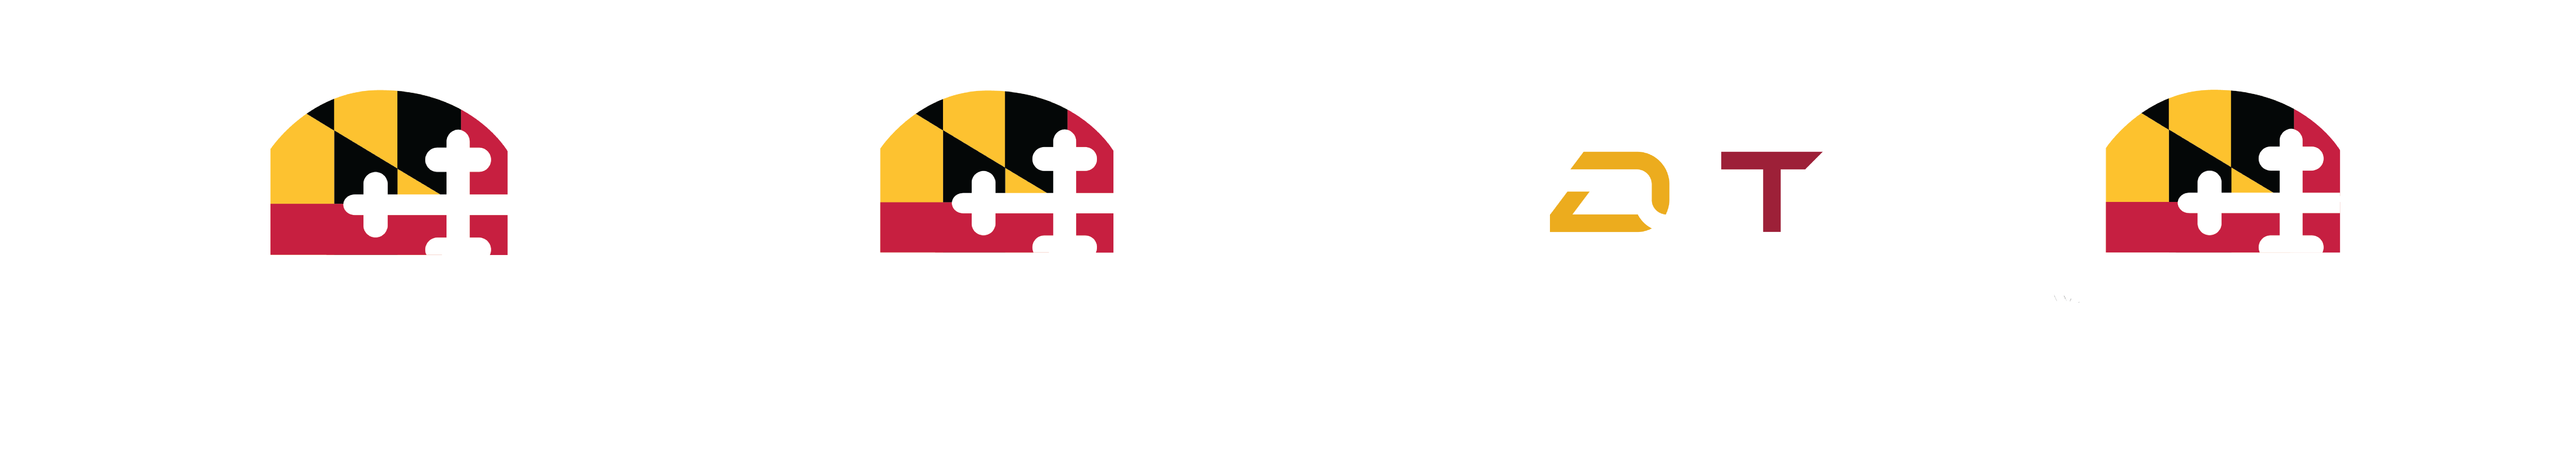 transit-oriented-development-in-maryland